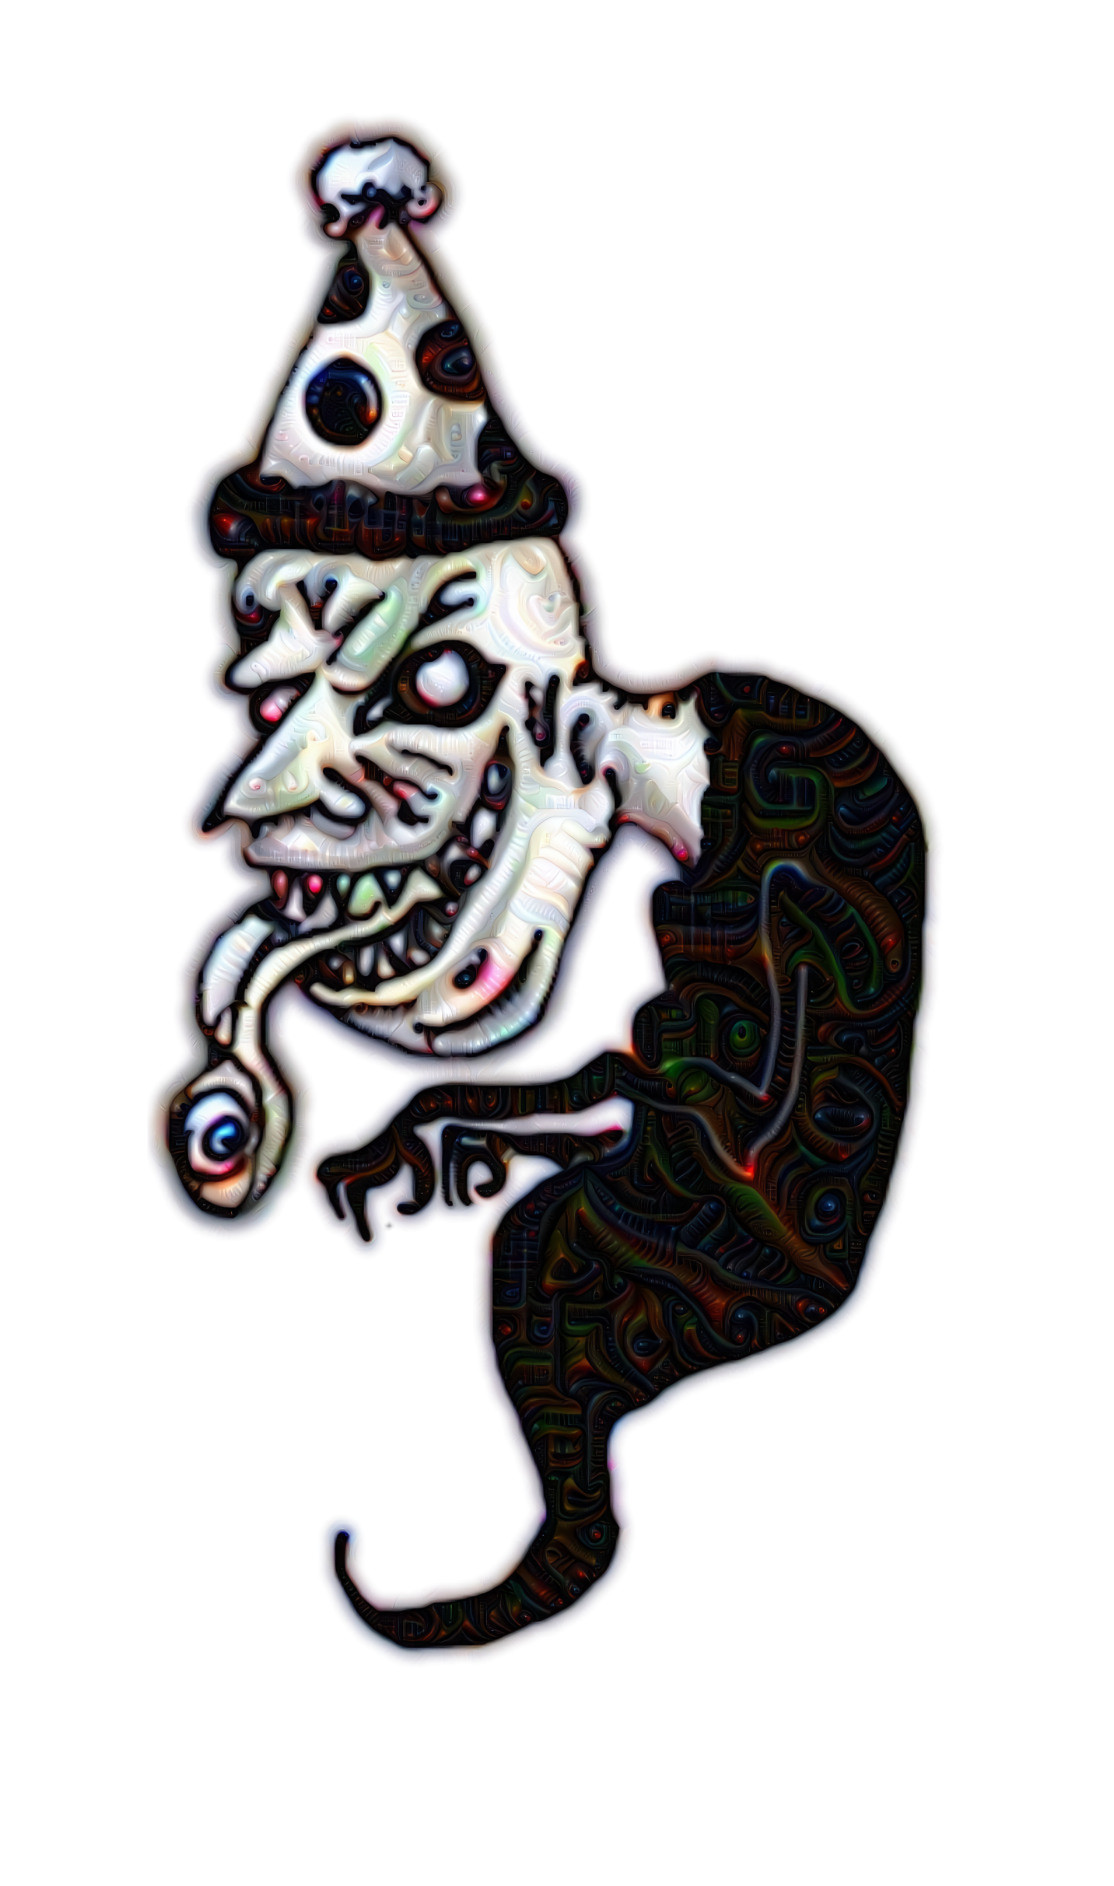 Spooky Mr. Spooky Clown- One of my doodlies.